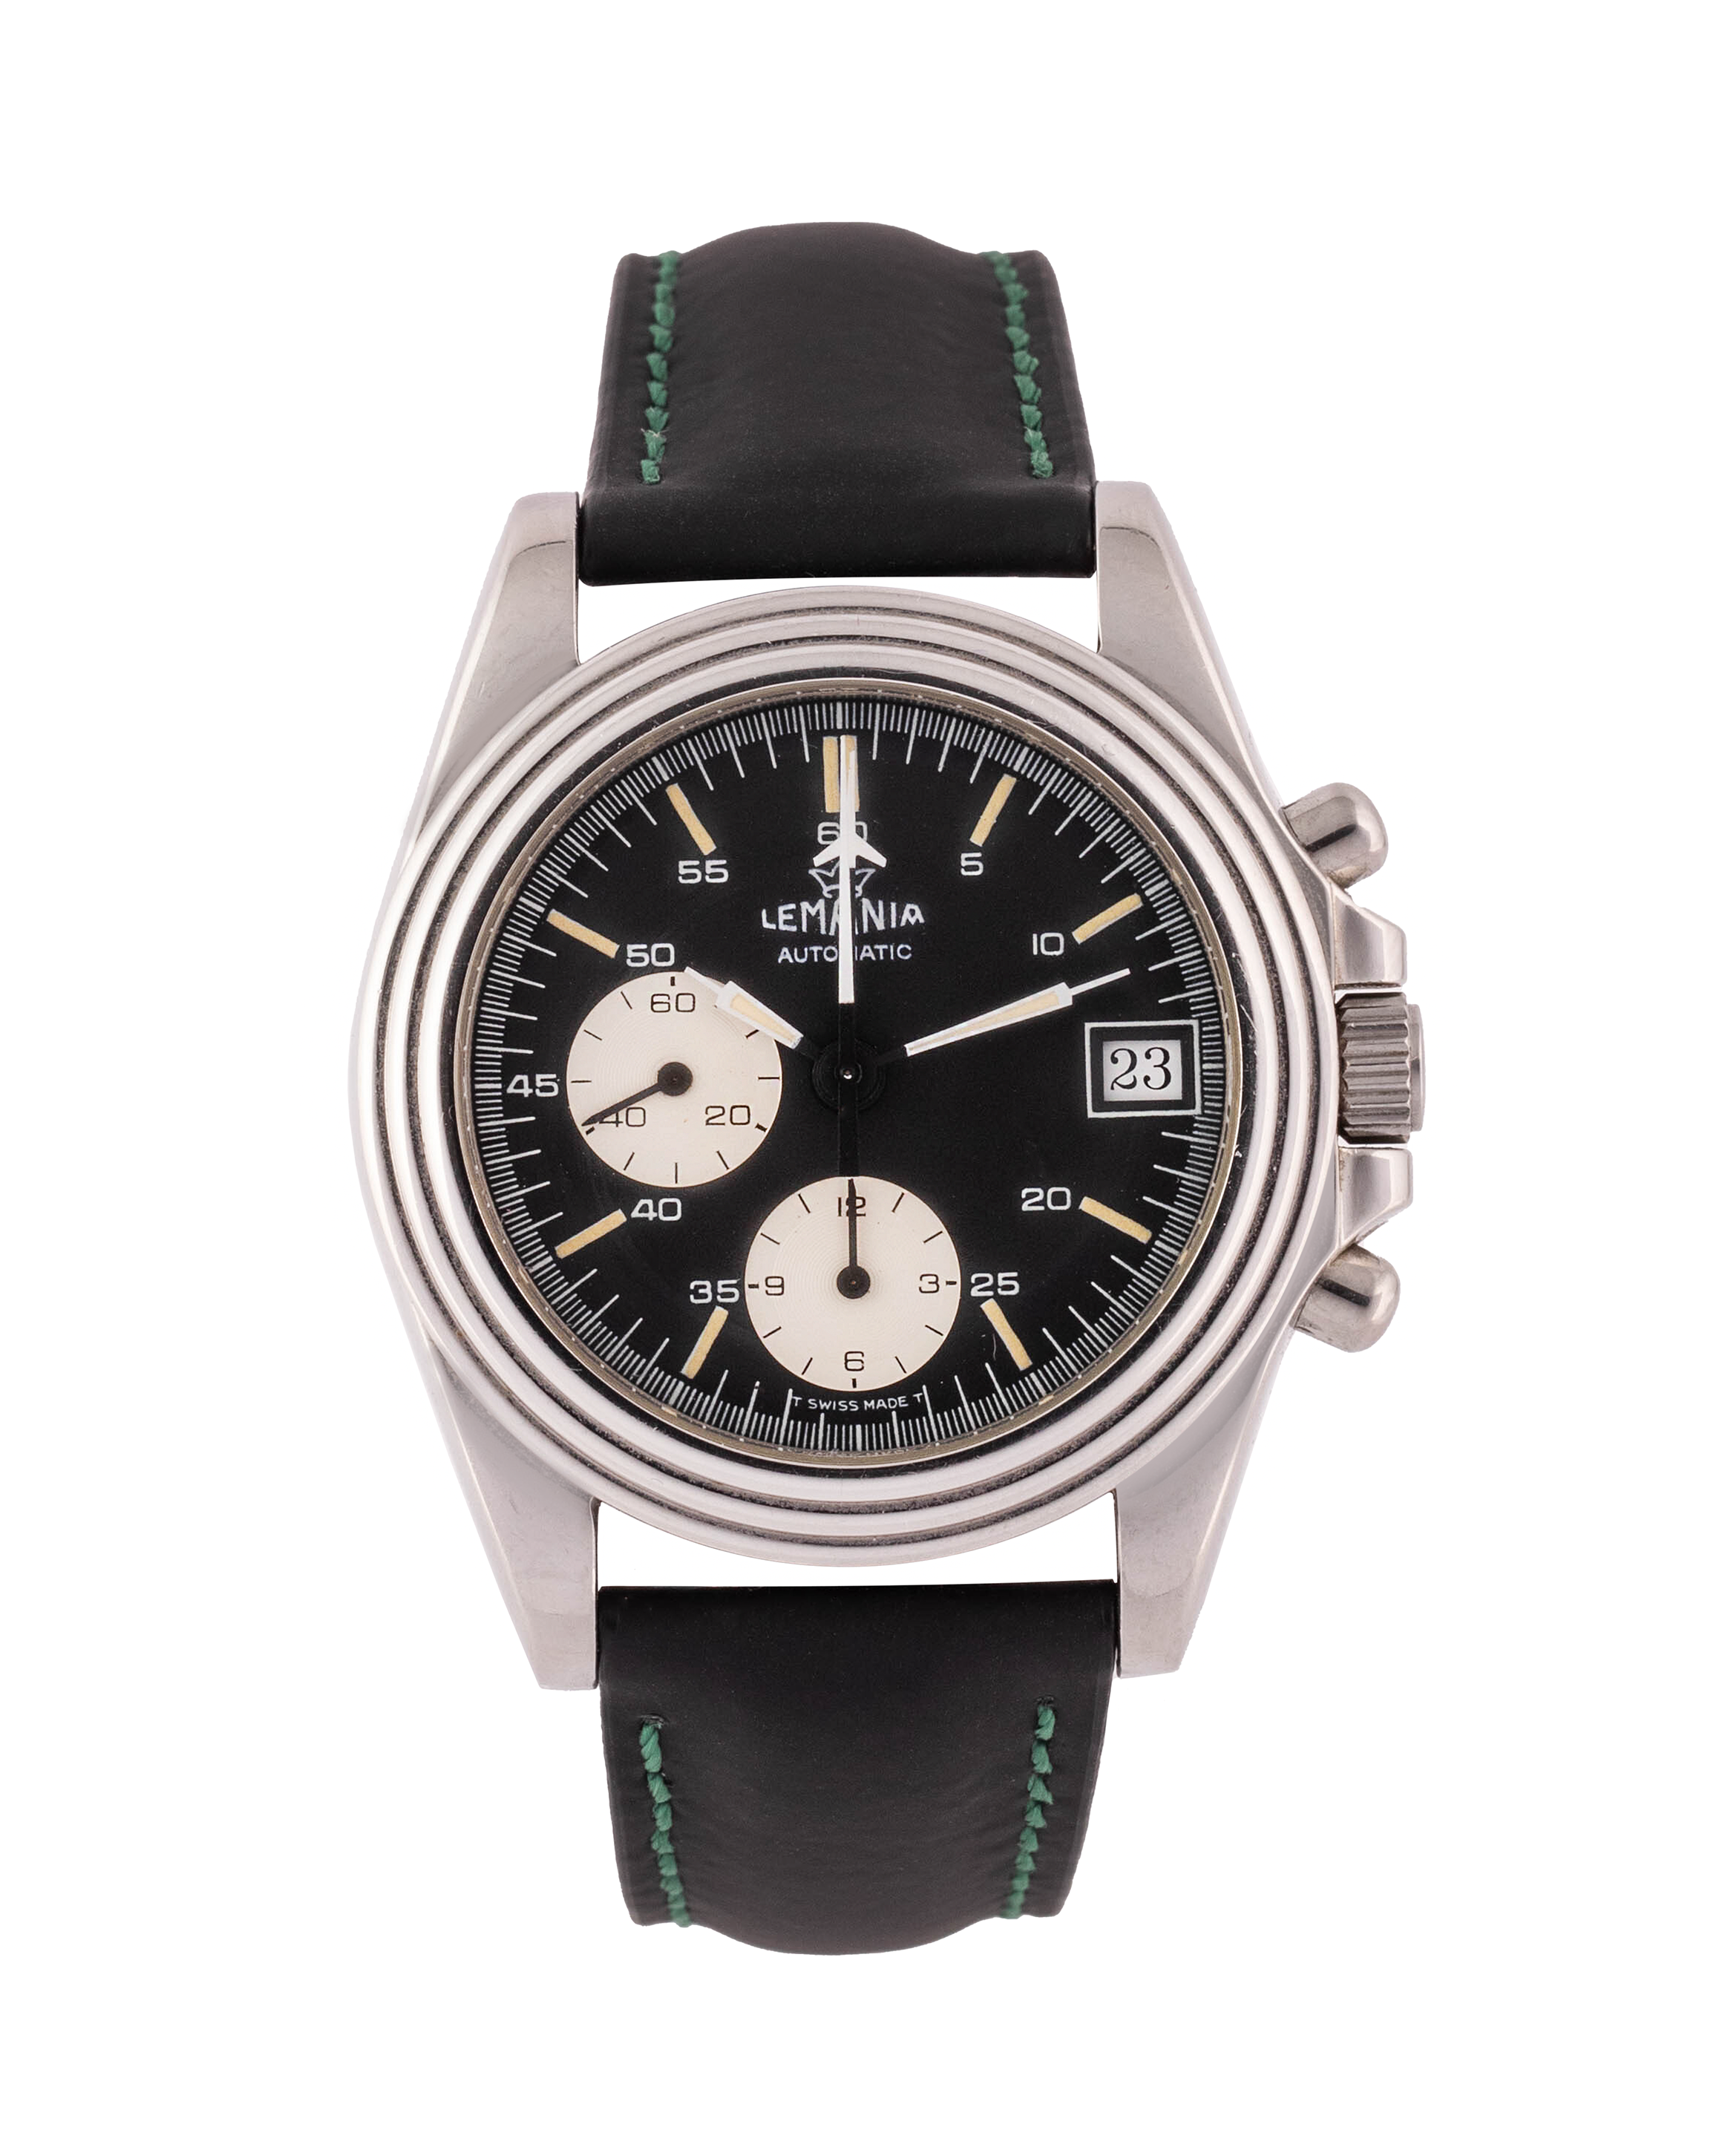 Lemania Chronograph "Oreade-Girardin" wrist watch